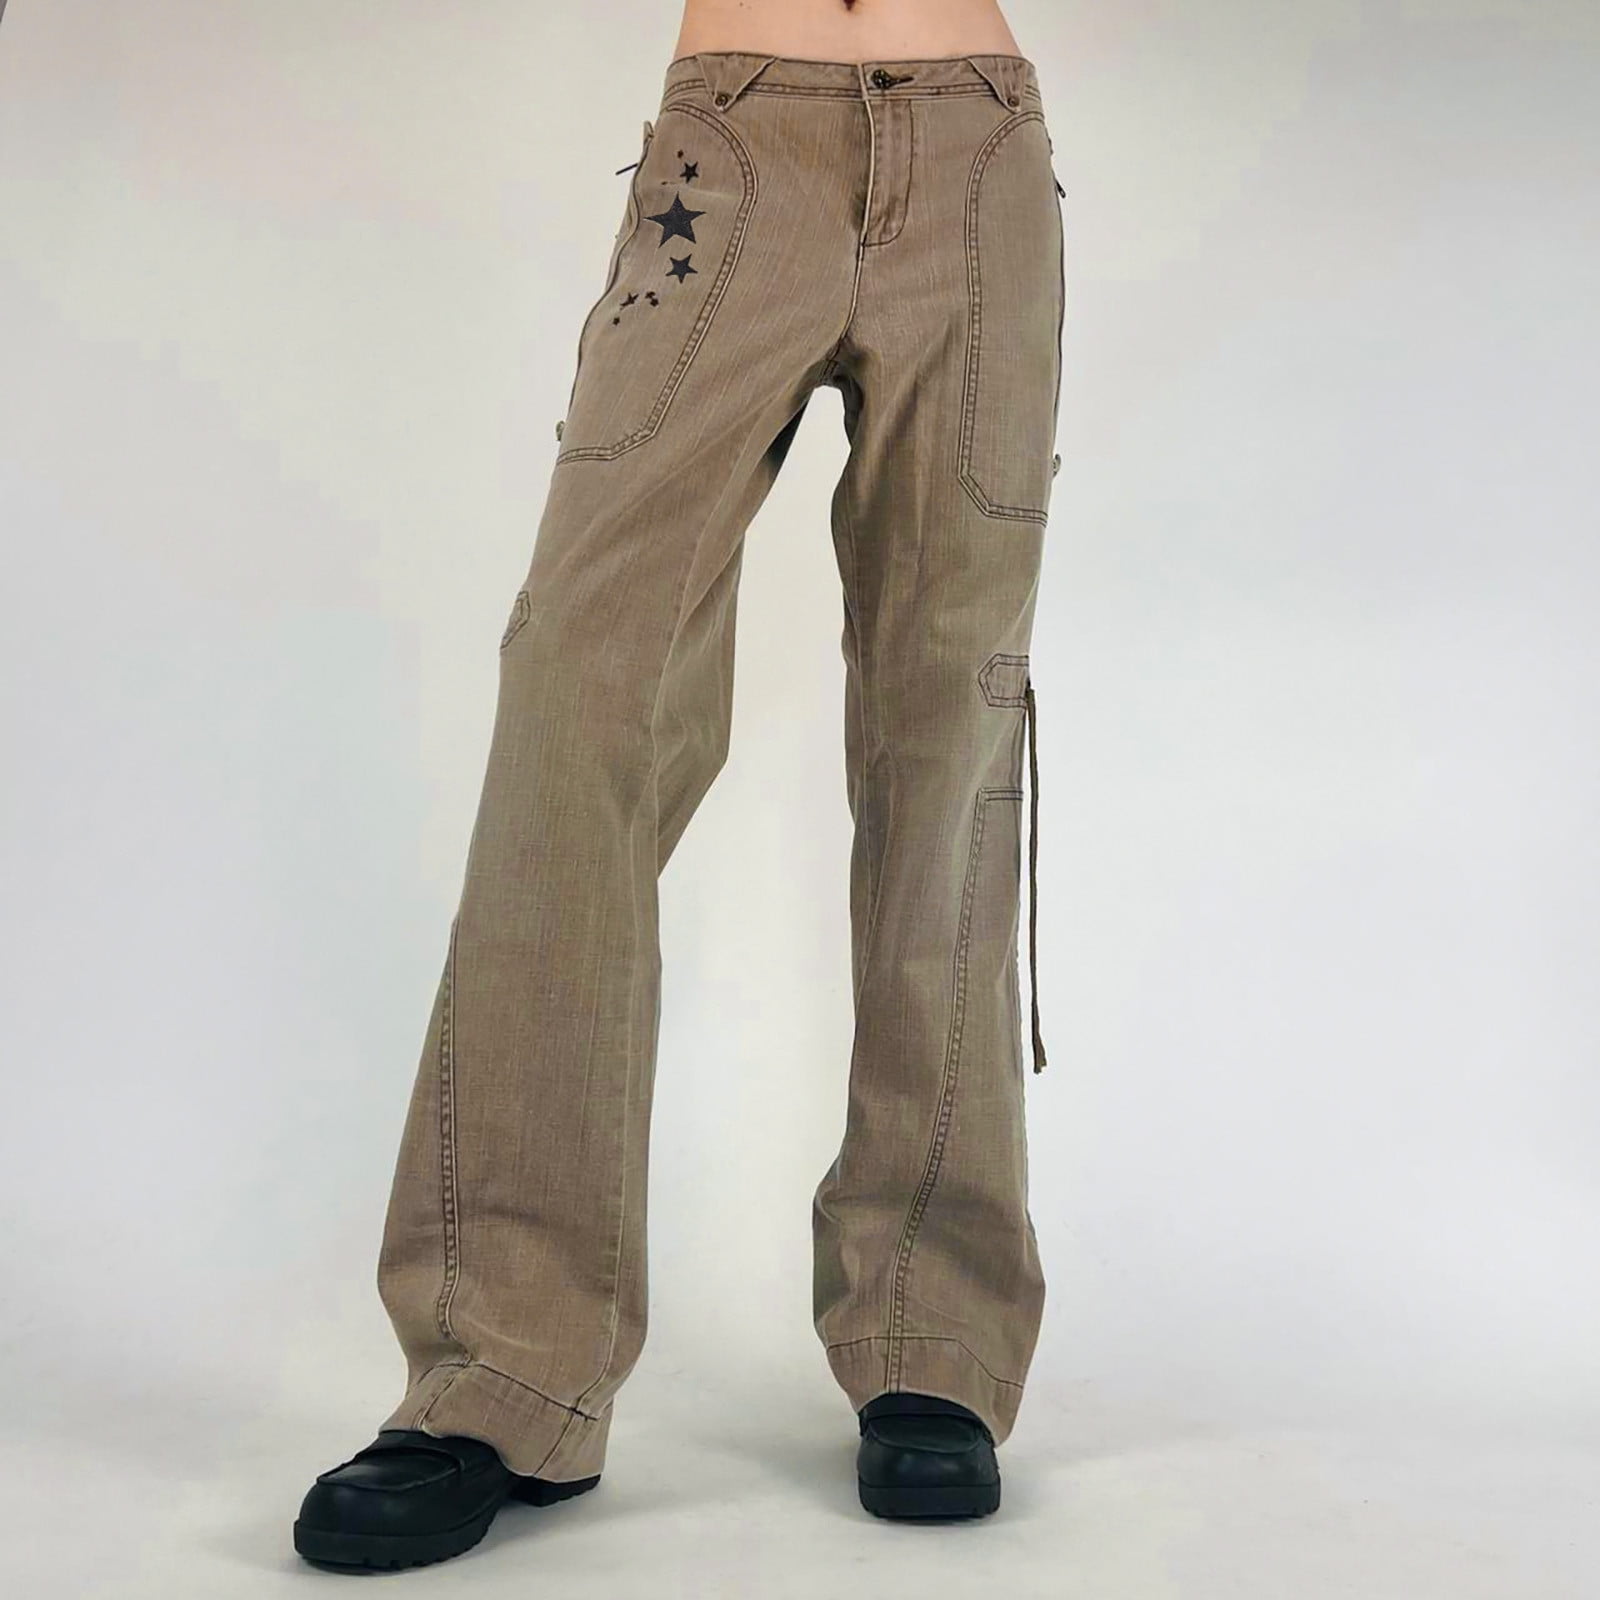 Gaecuw Jeans for Women Regular Fit Long Pants Button Up Zipper